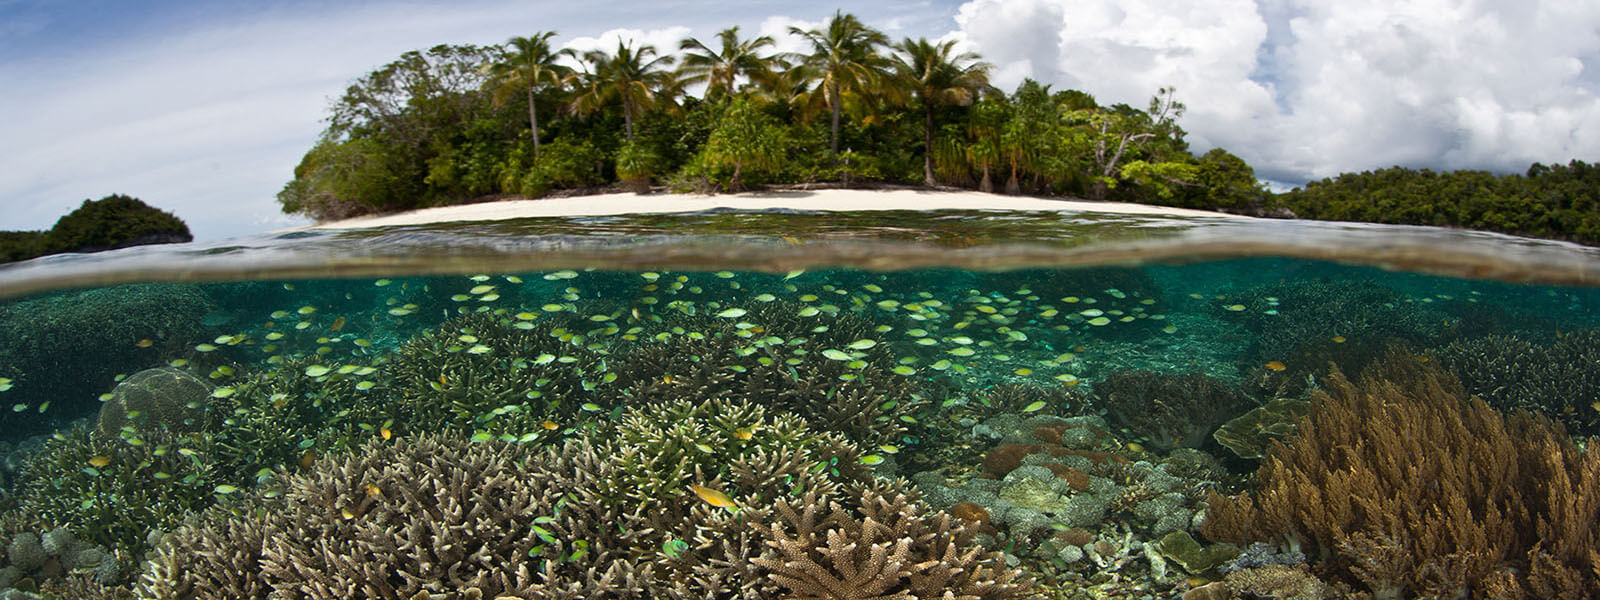 We snorkel over shallow reefs in the Solomon Islands